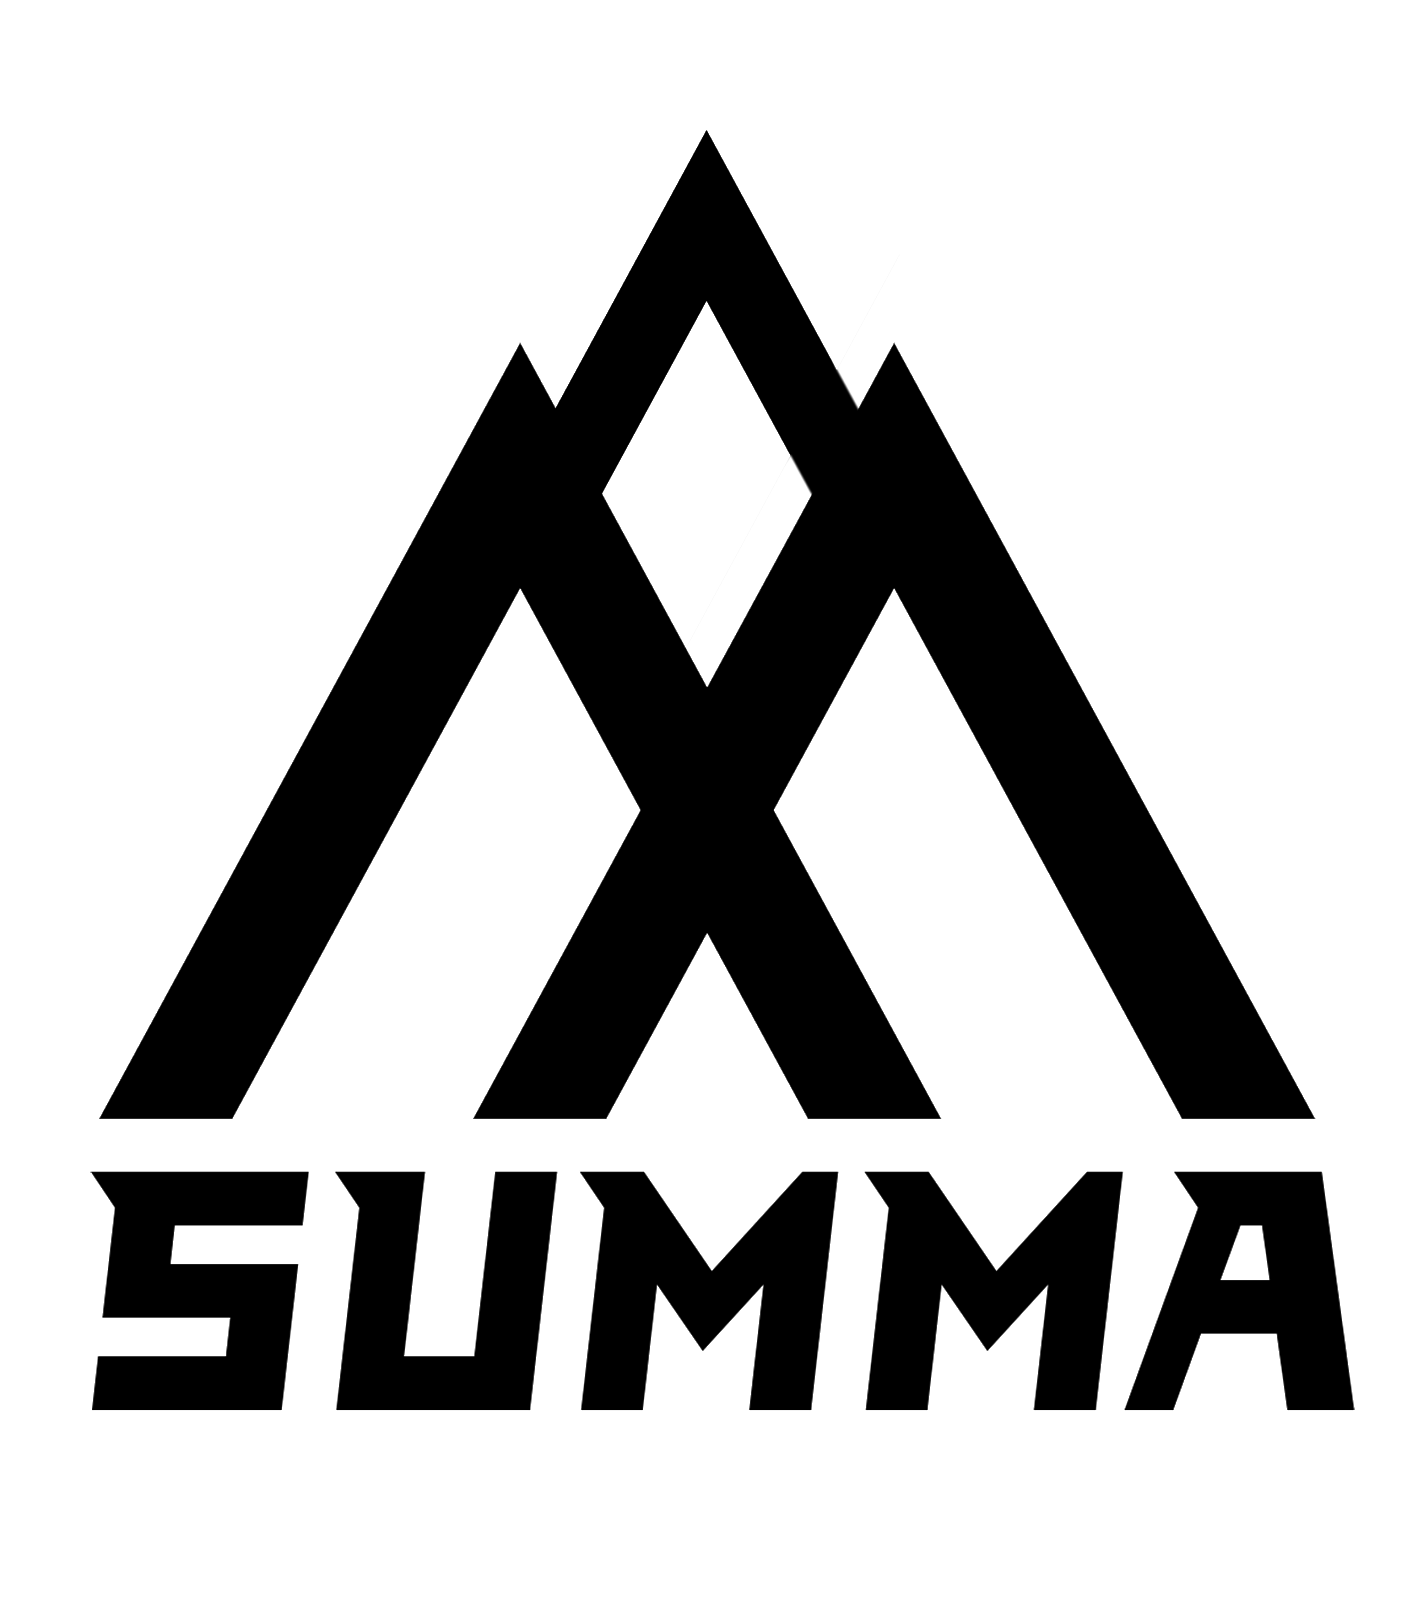 Summa Logo - Summa Sports Wear Police. Fashionista. Celebrity